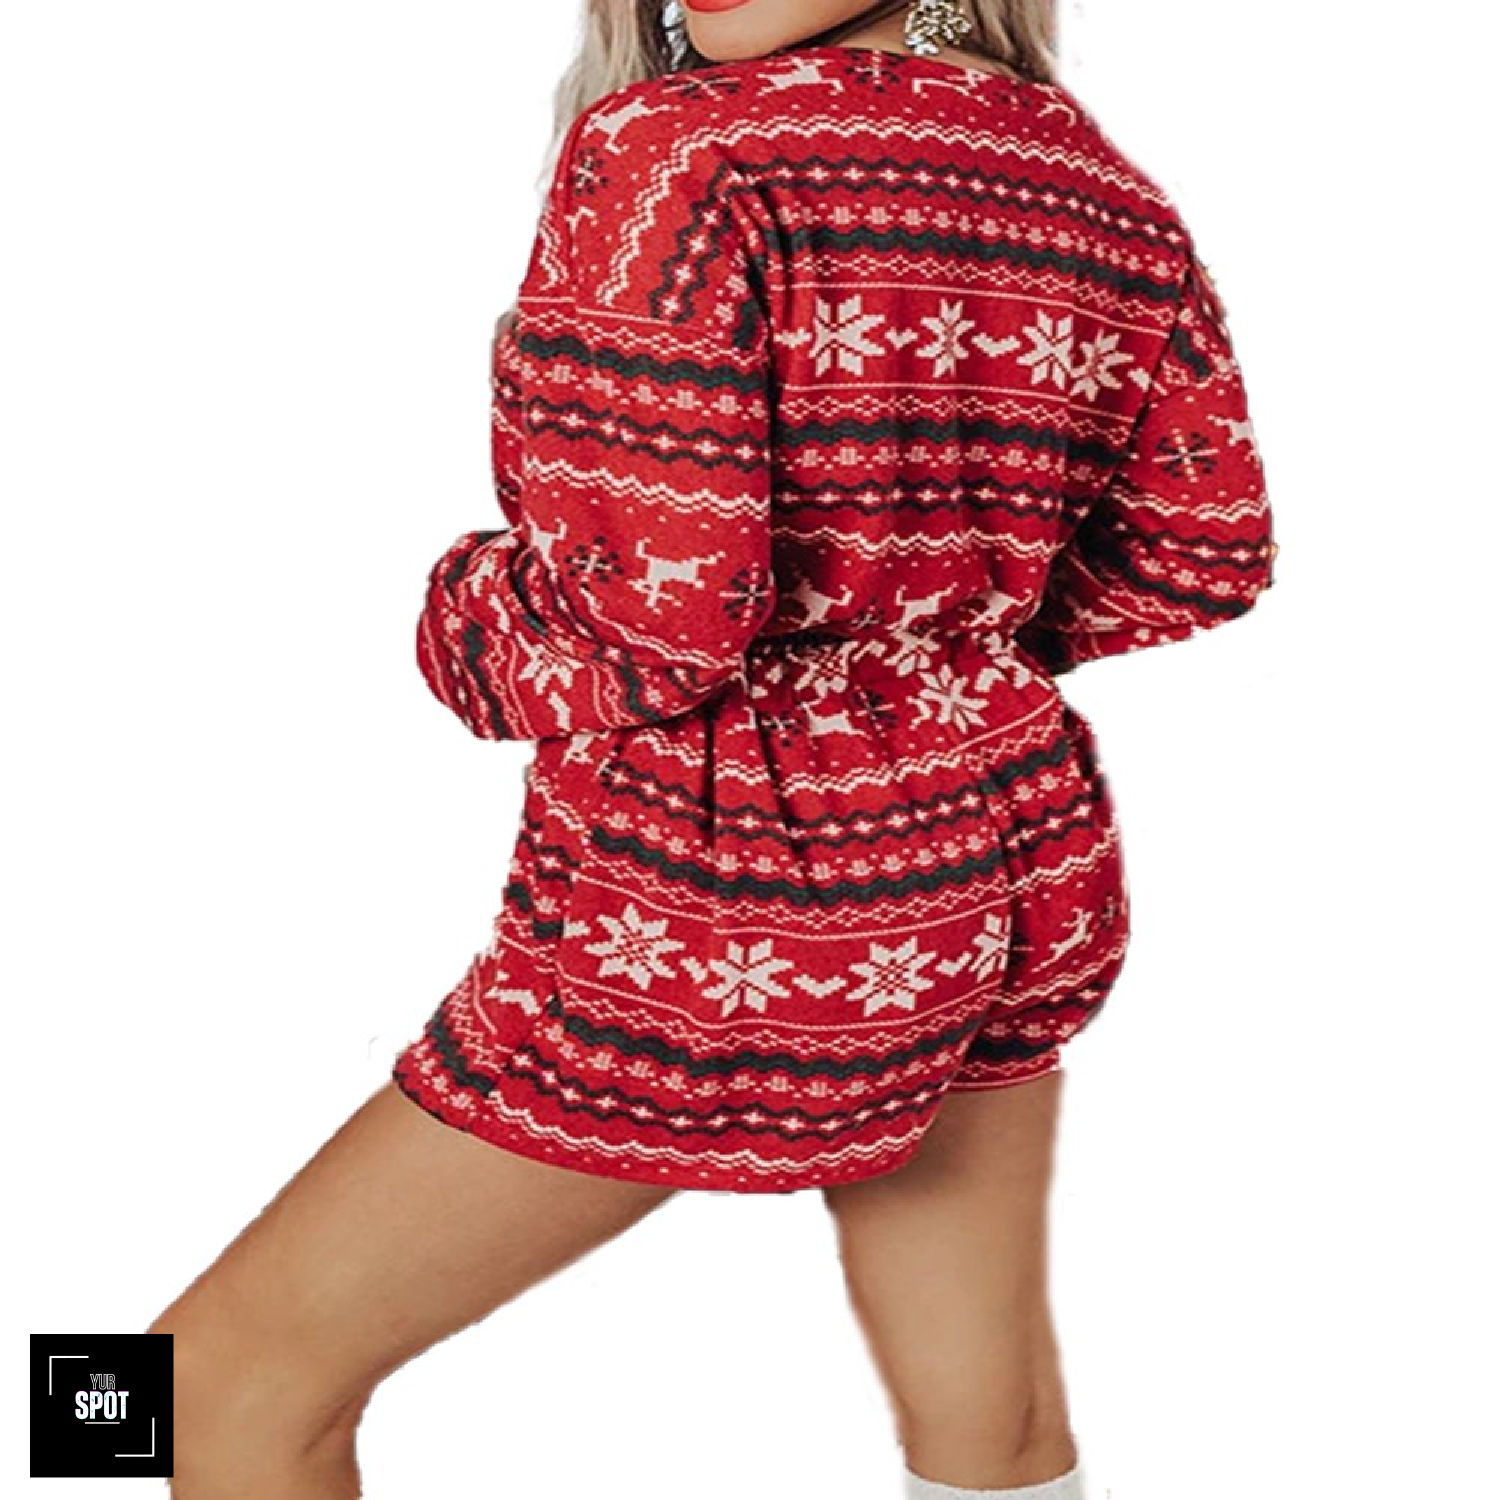 Women's 2-Piece Christmas Pajama Set - Snowflake Print Crop Top with Shorts - Cozy Knit Holiday Loungewear